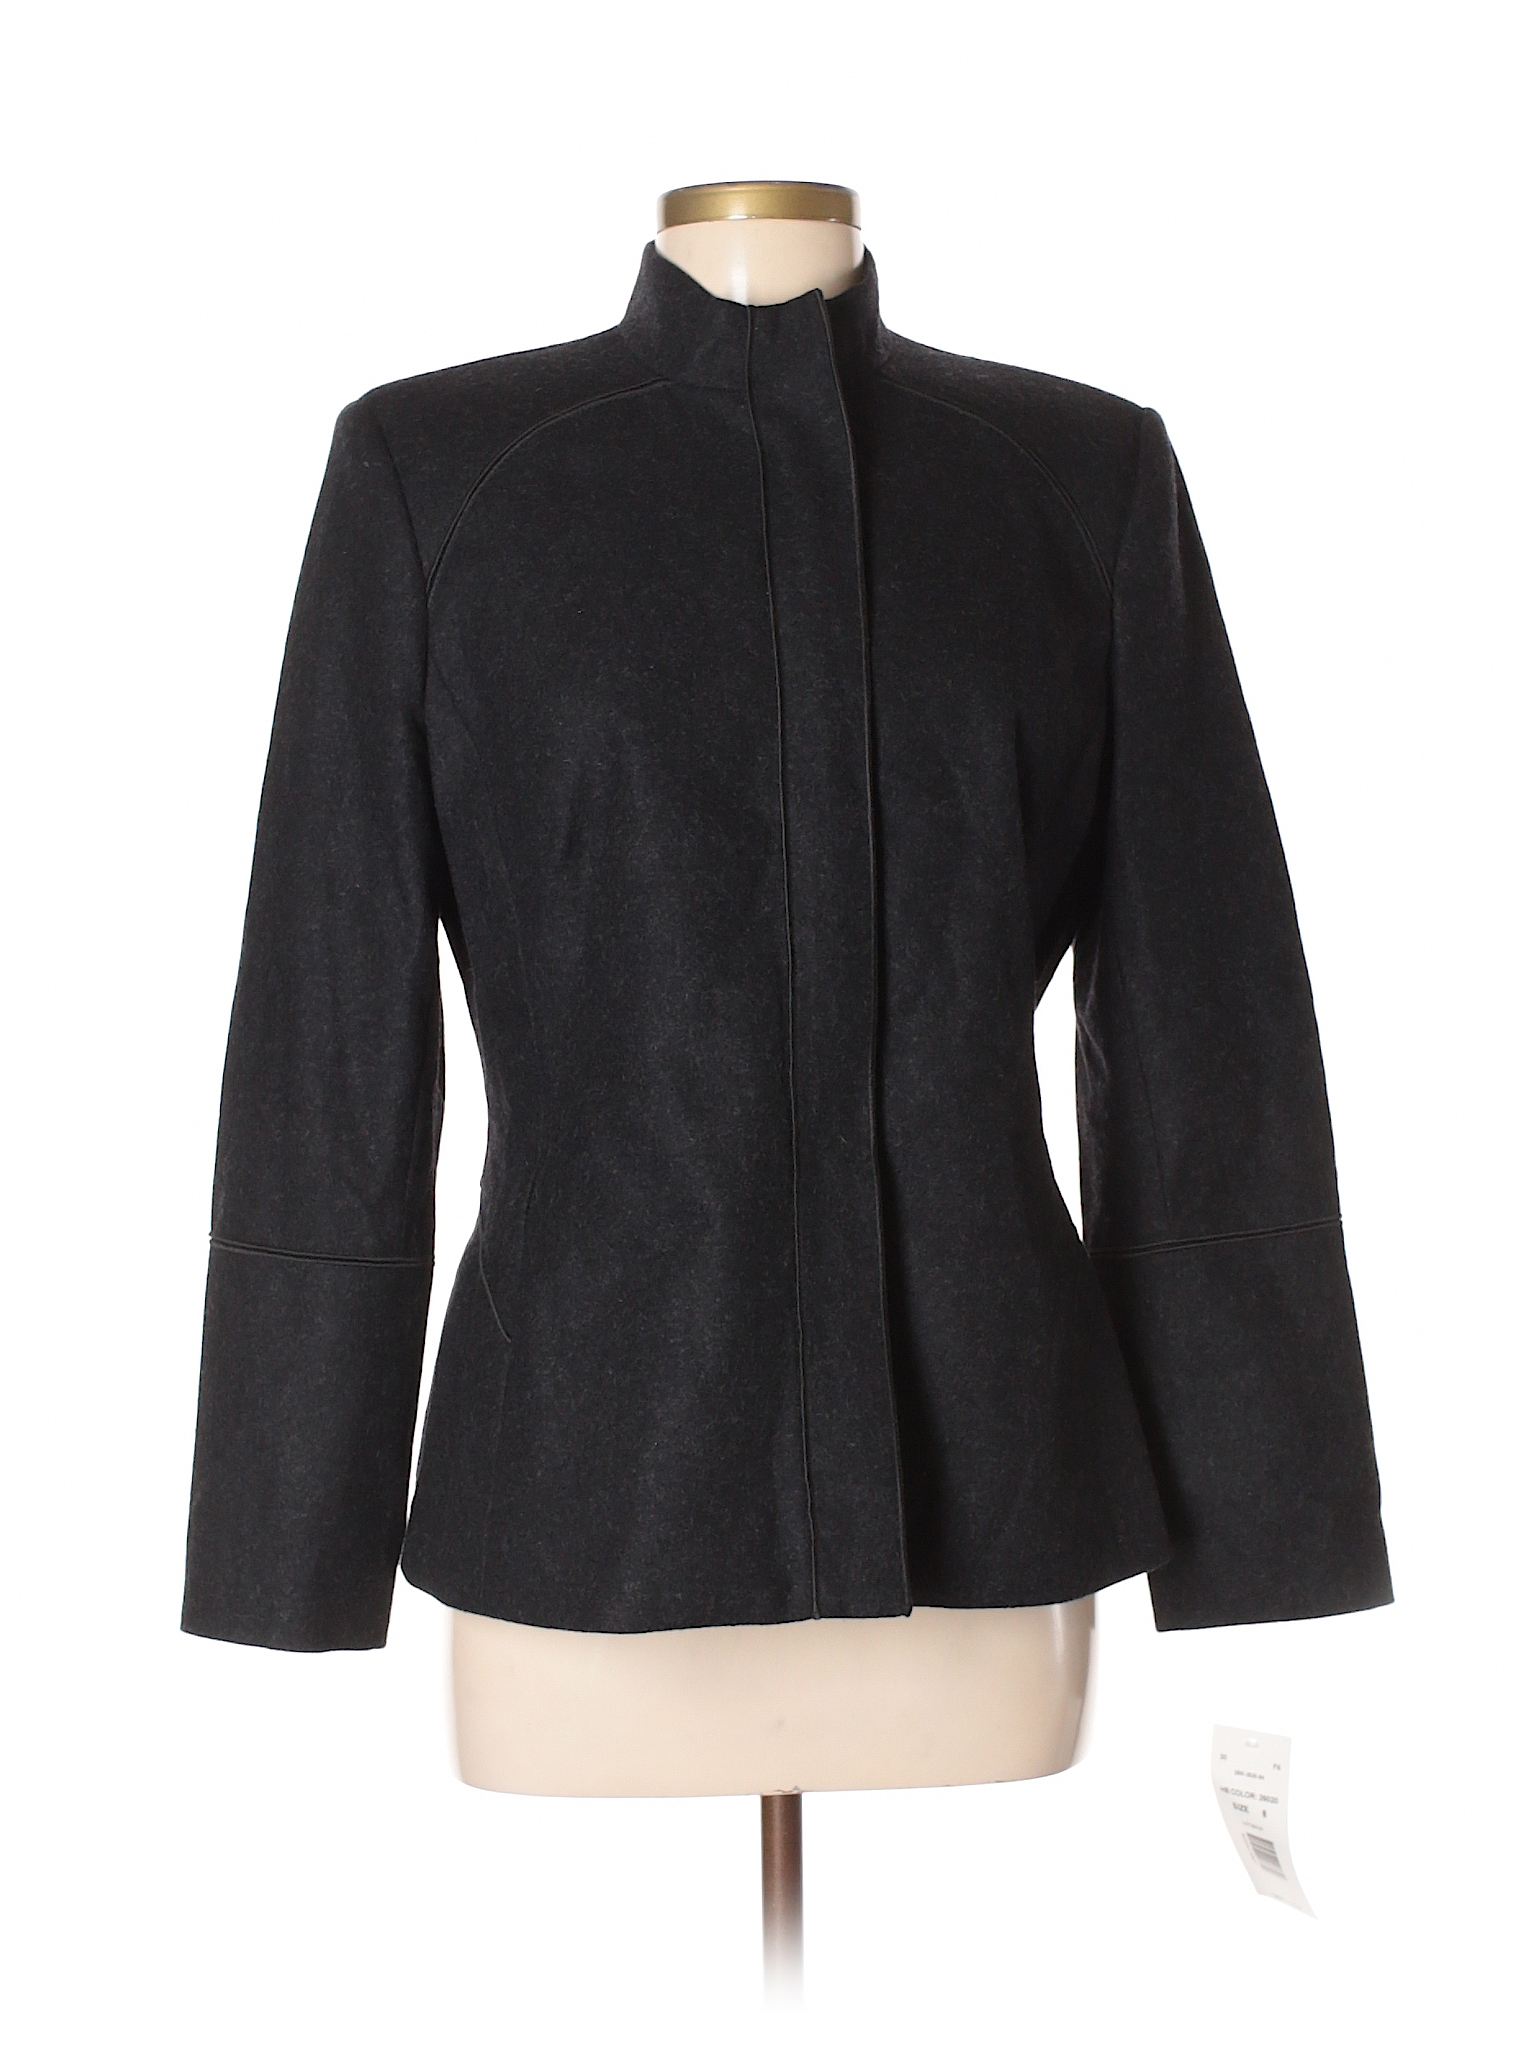 Harve Benard by Benard Holtzman Solid Gray Jacket Size 8 - 74% off ...